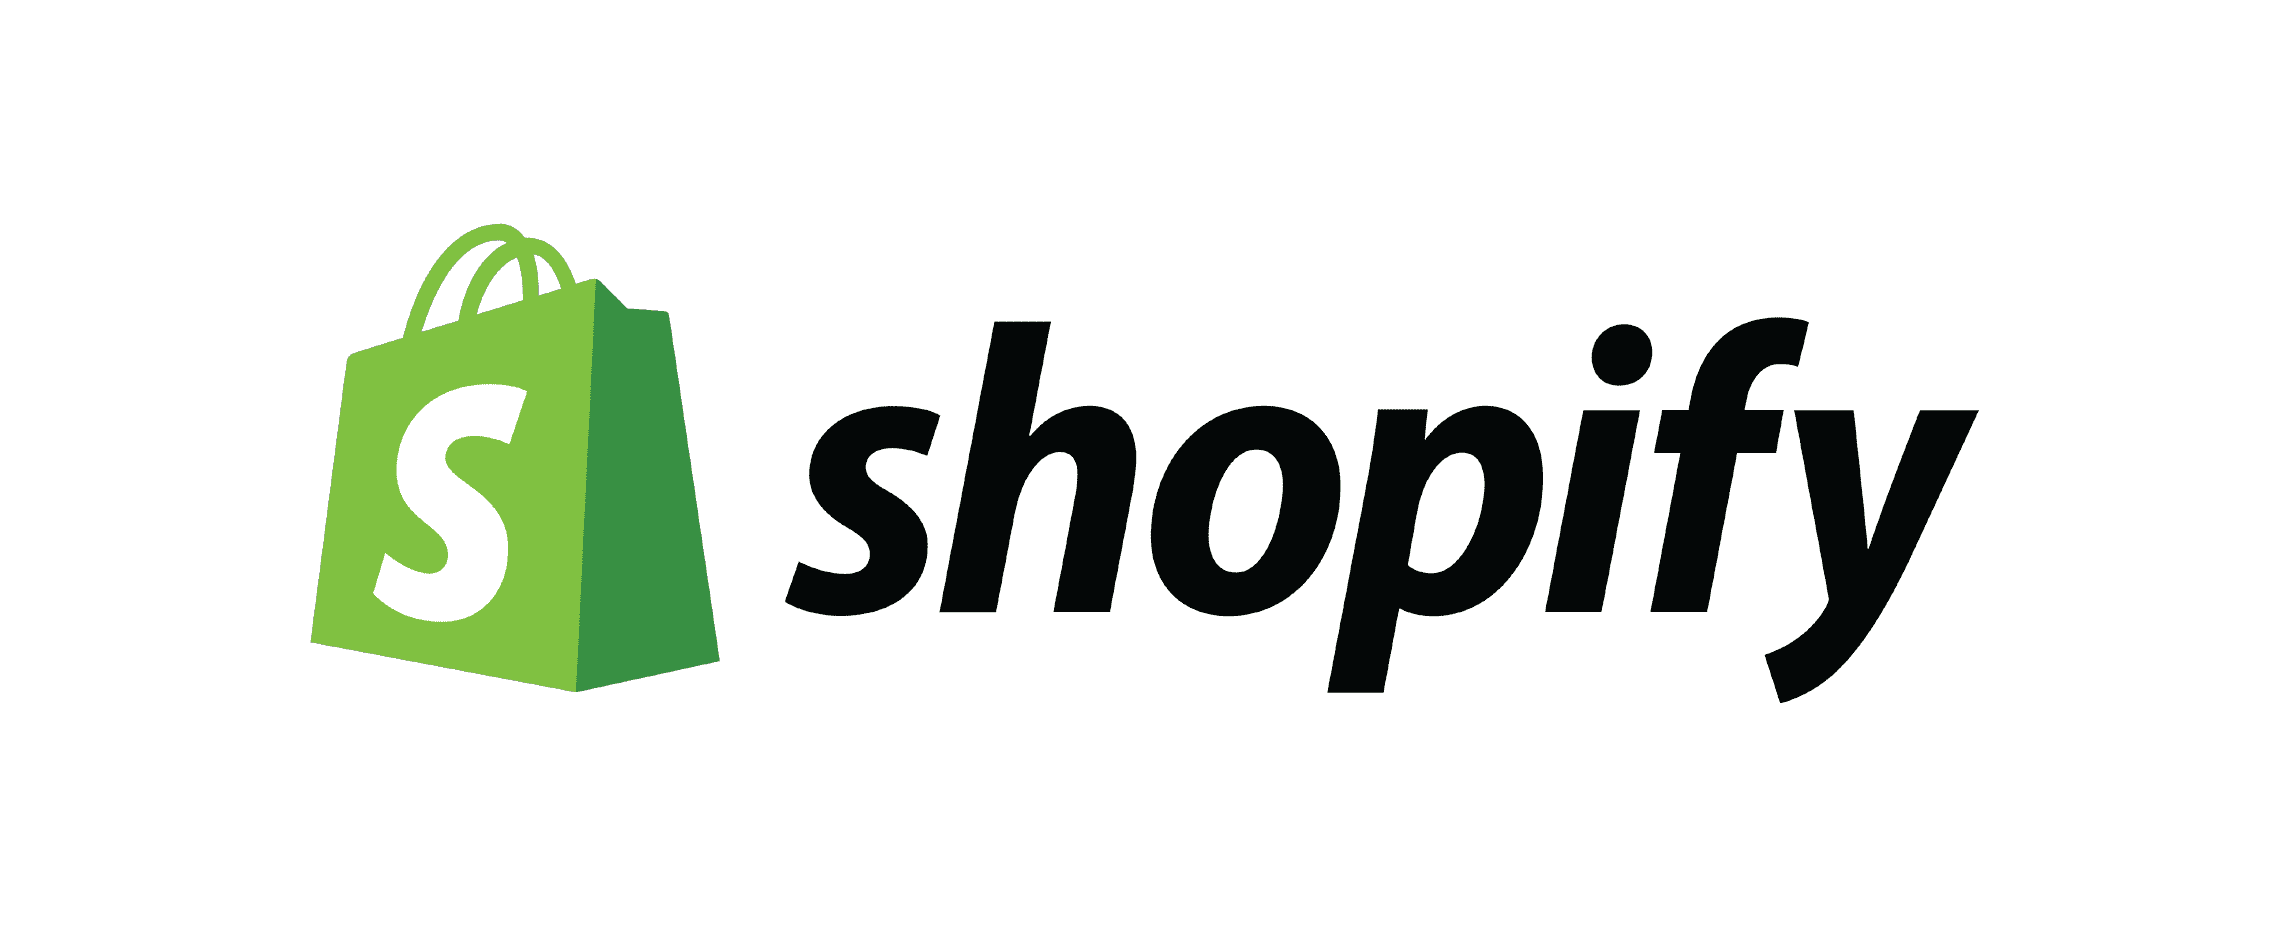 flow digital is specialized in shopify platform